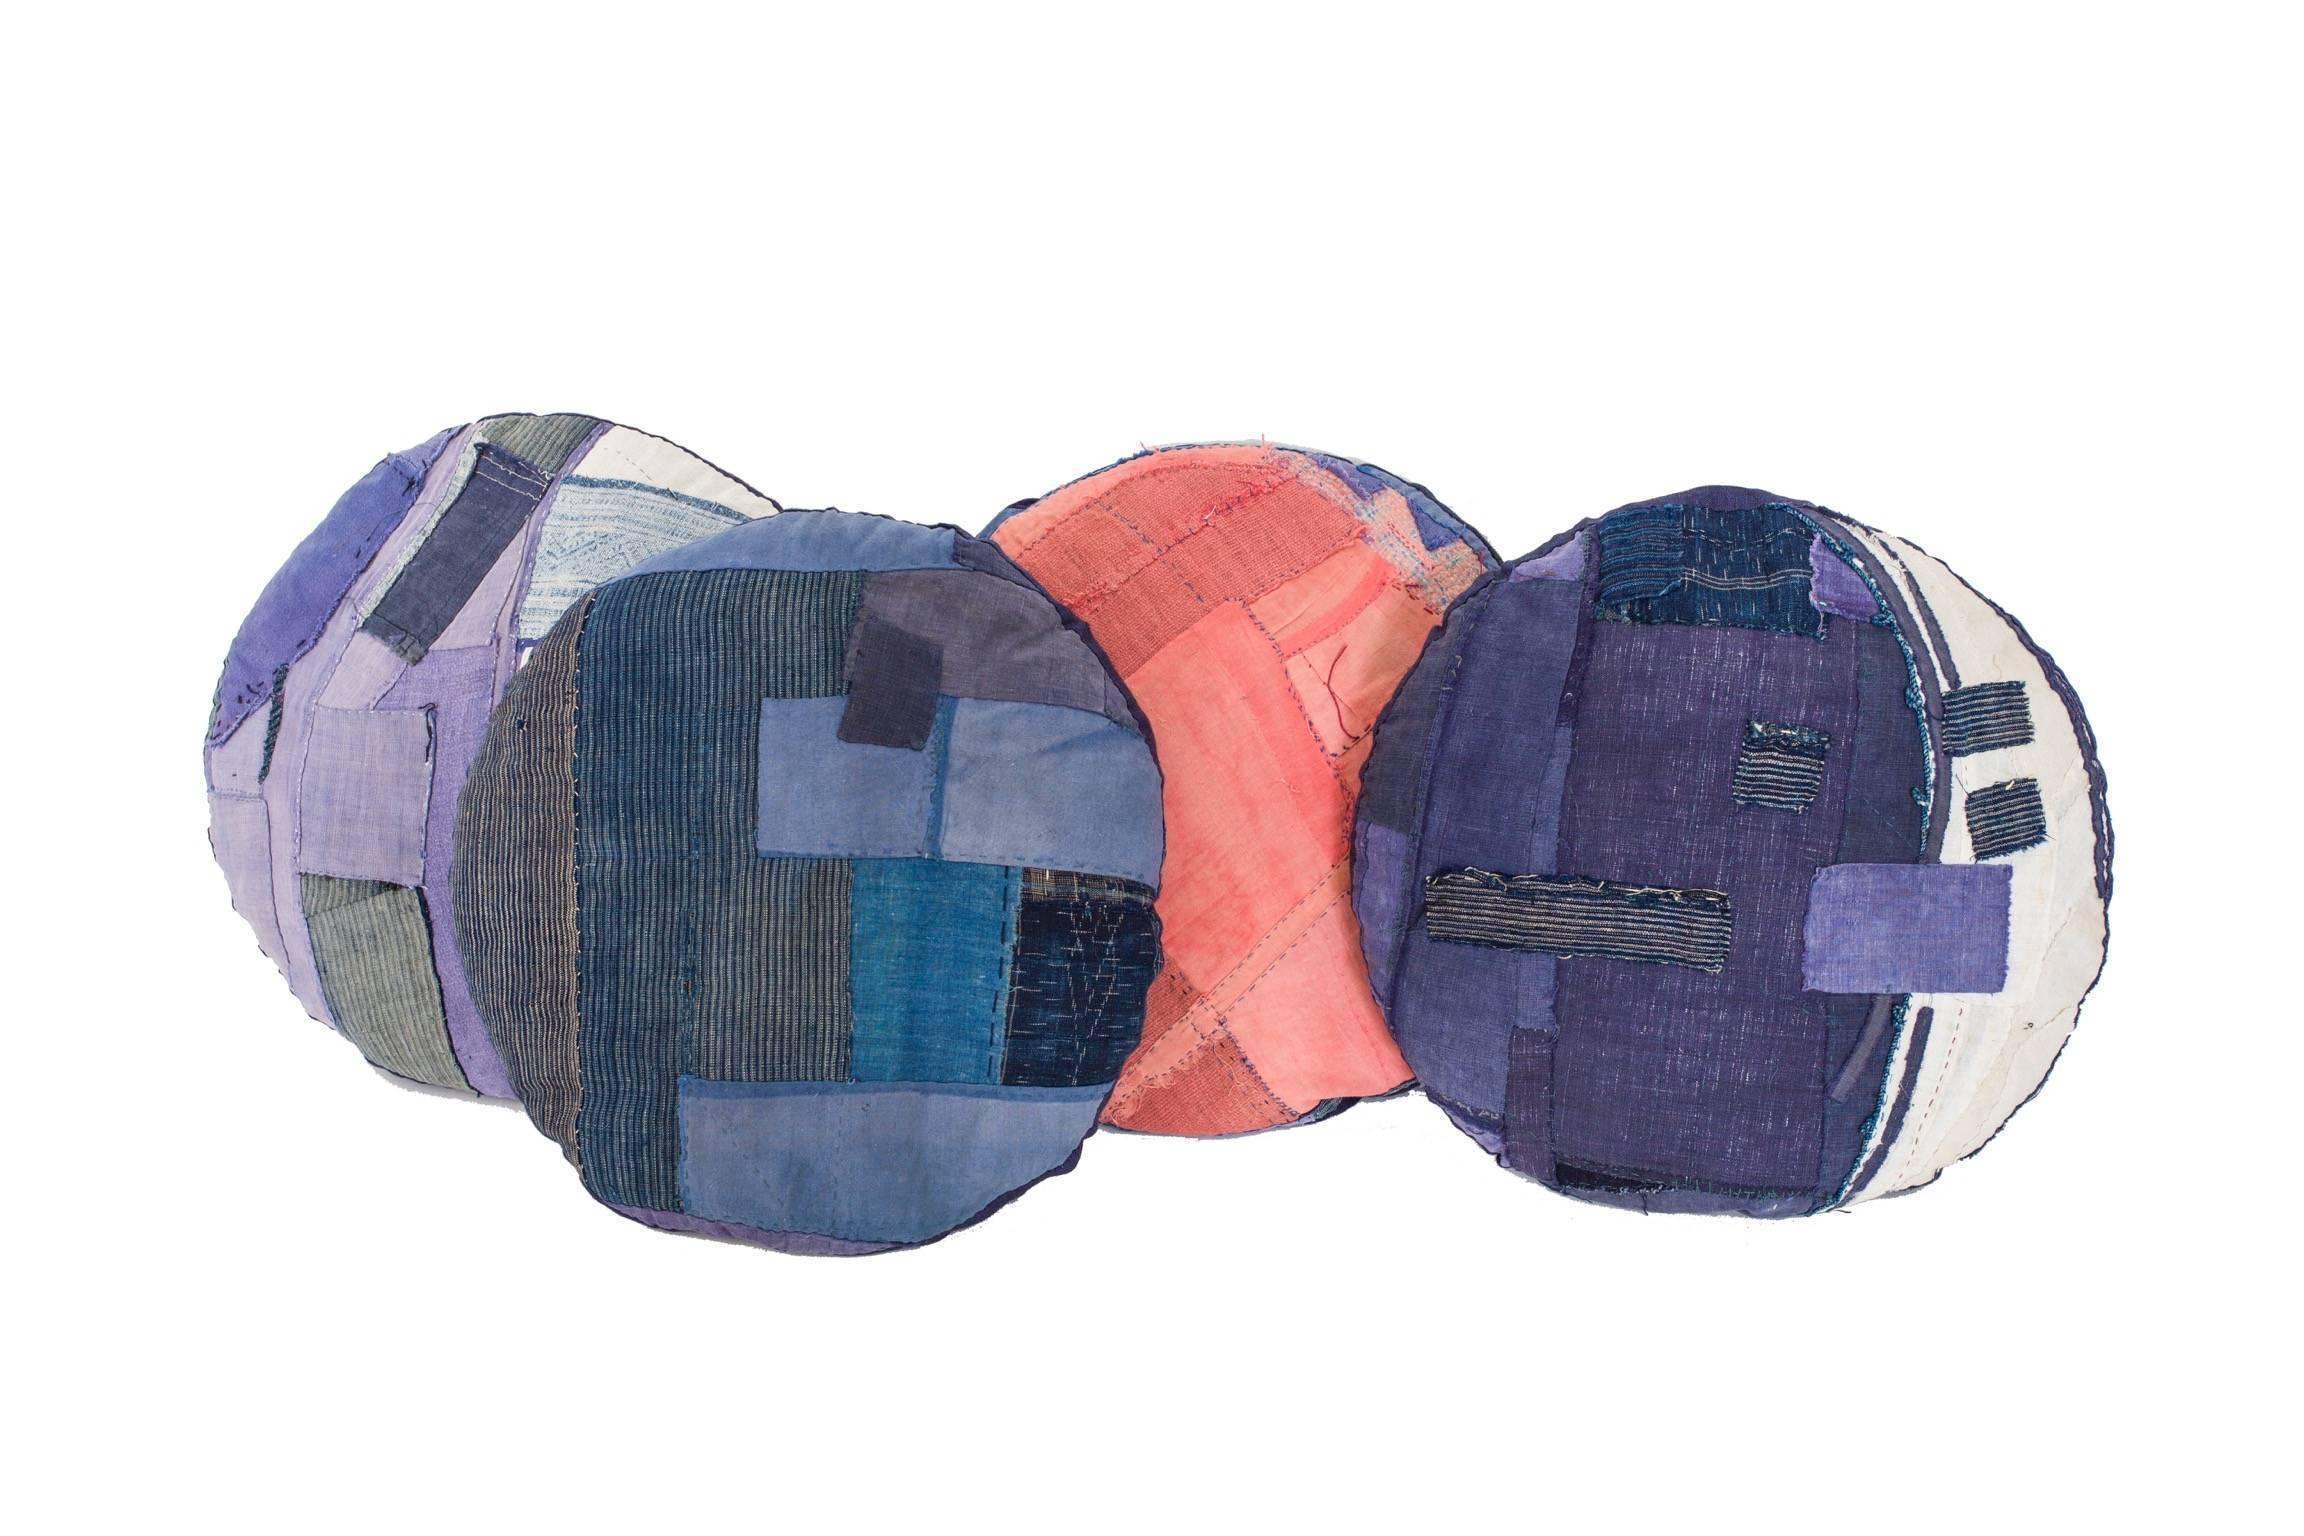 Boro Style Moon Phase, Round Cushion, Indigo and Resit Dye Pillow For Sale 3